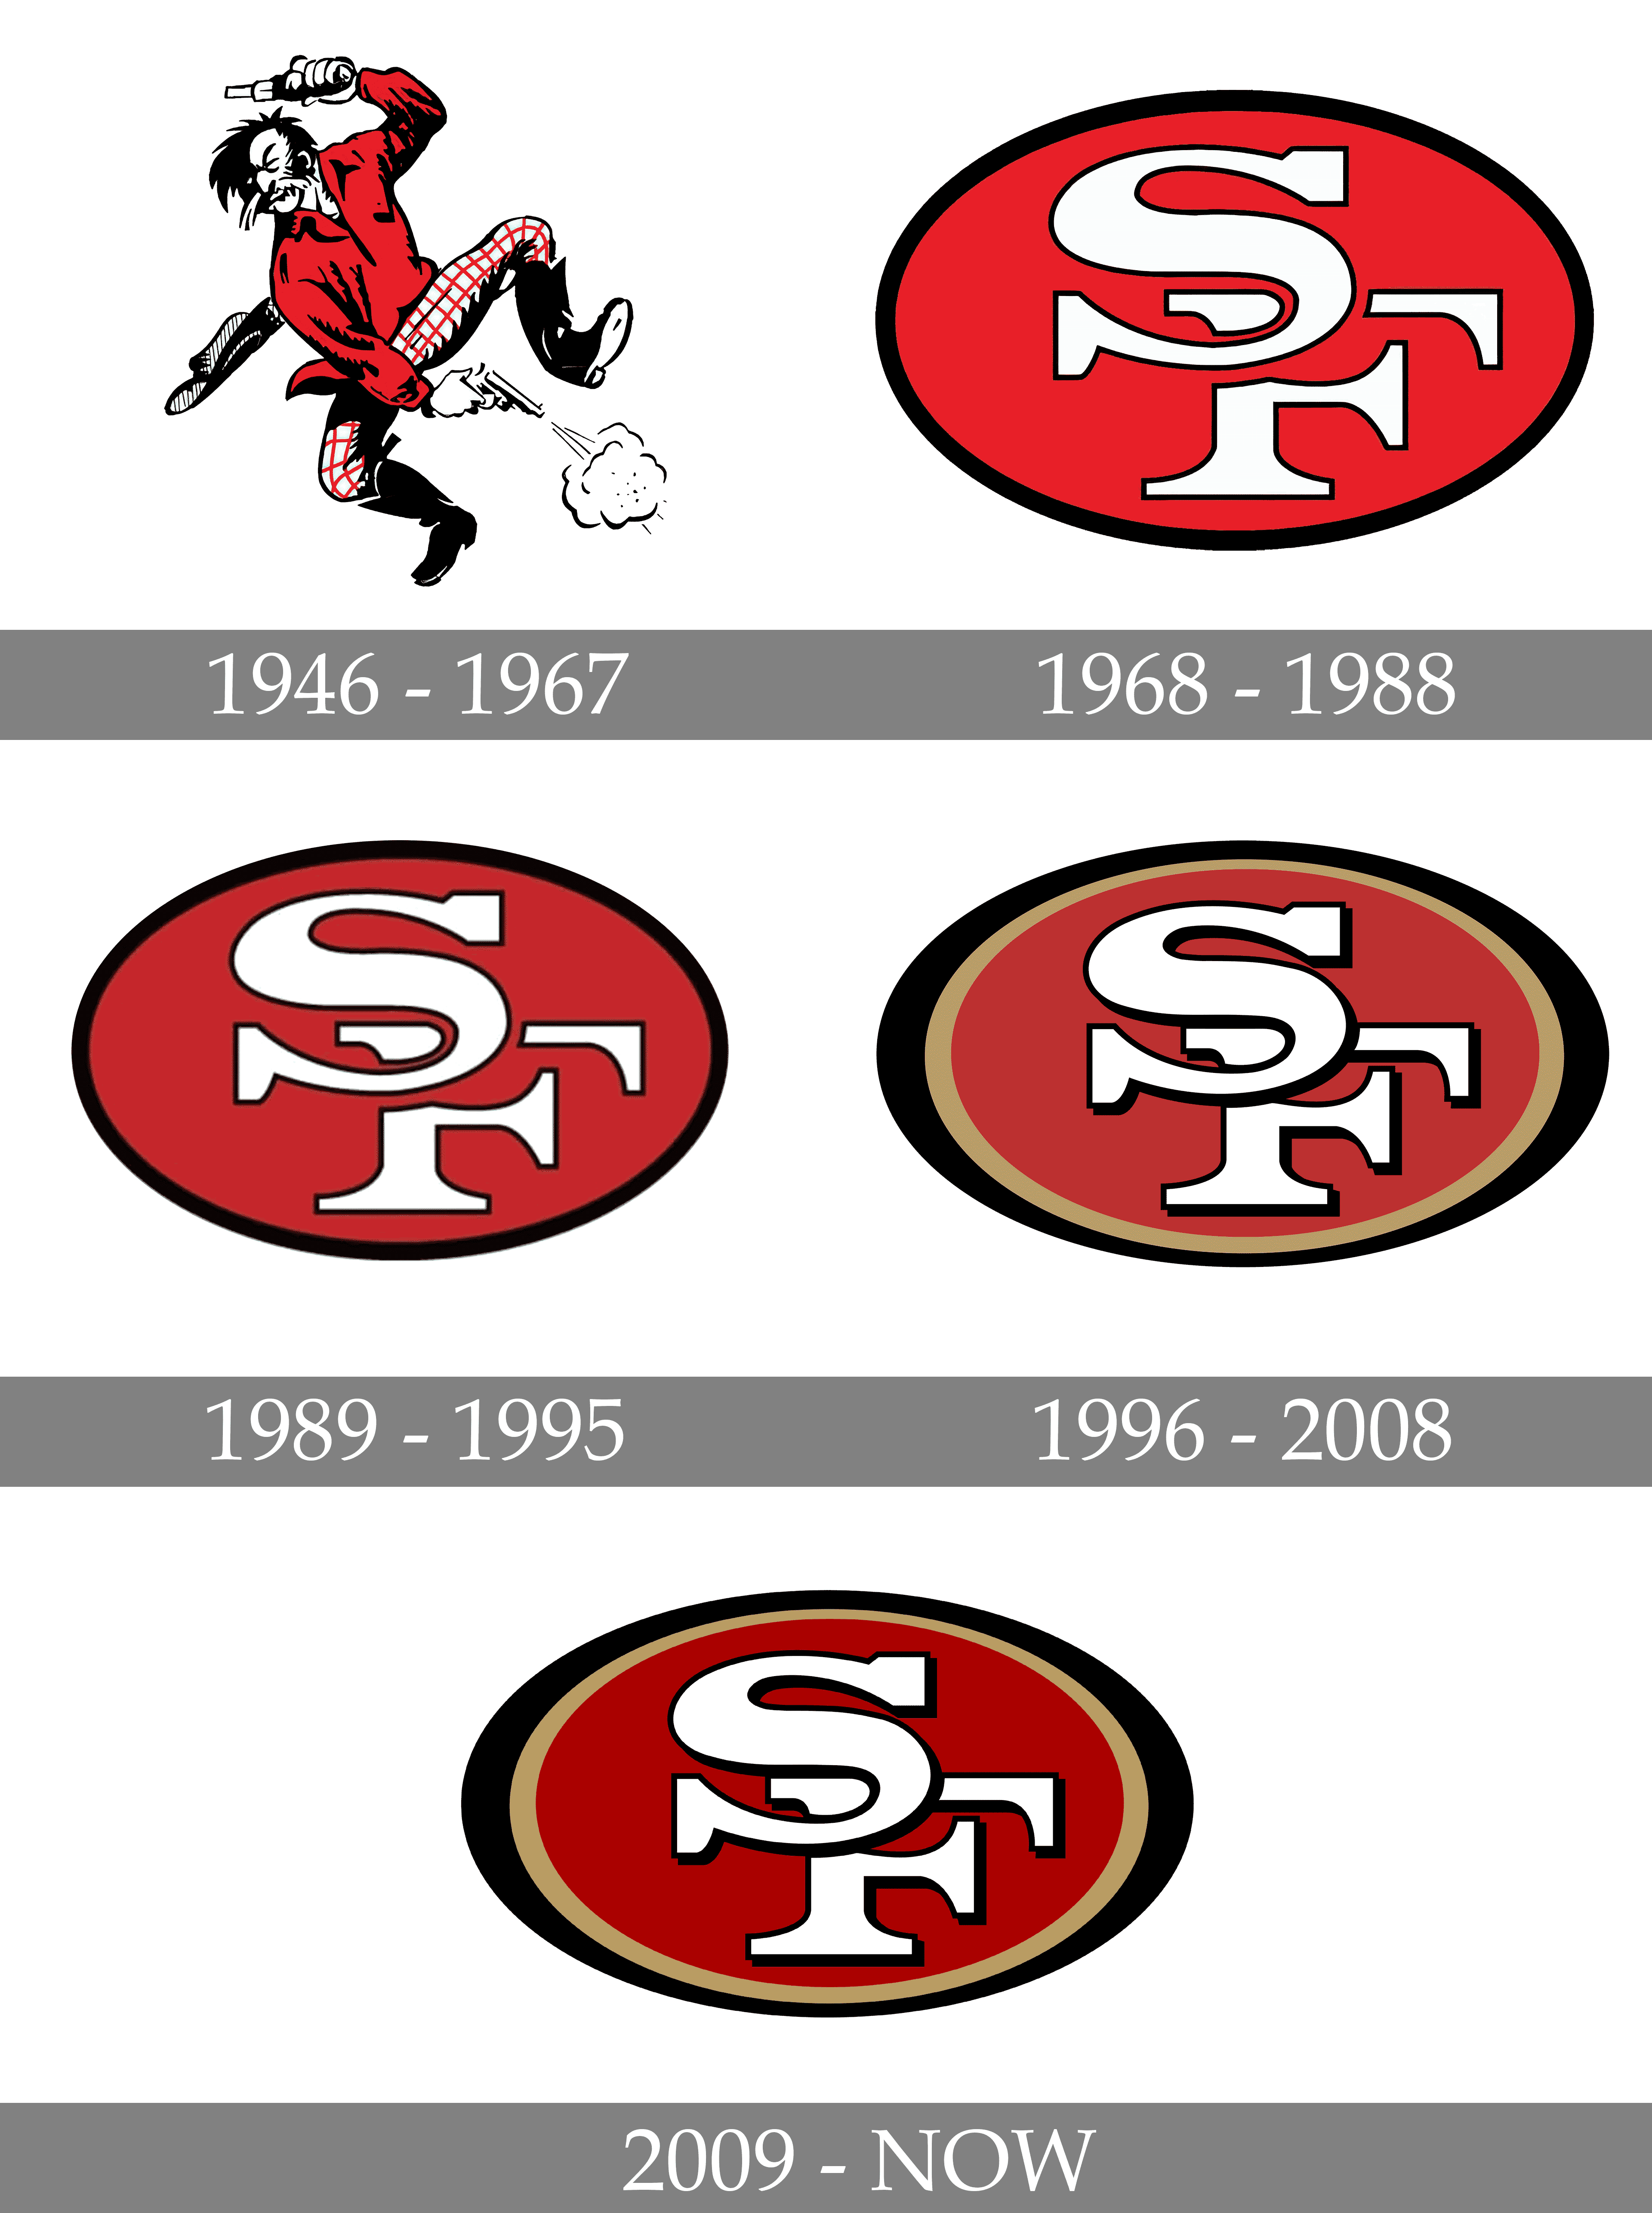 the 49ers logo